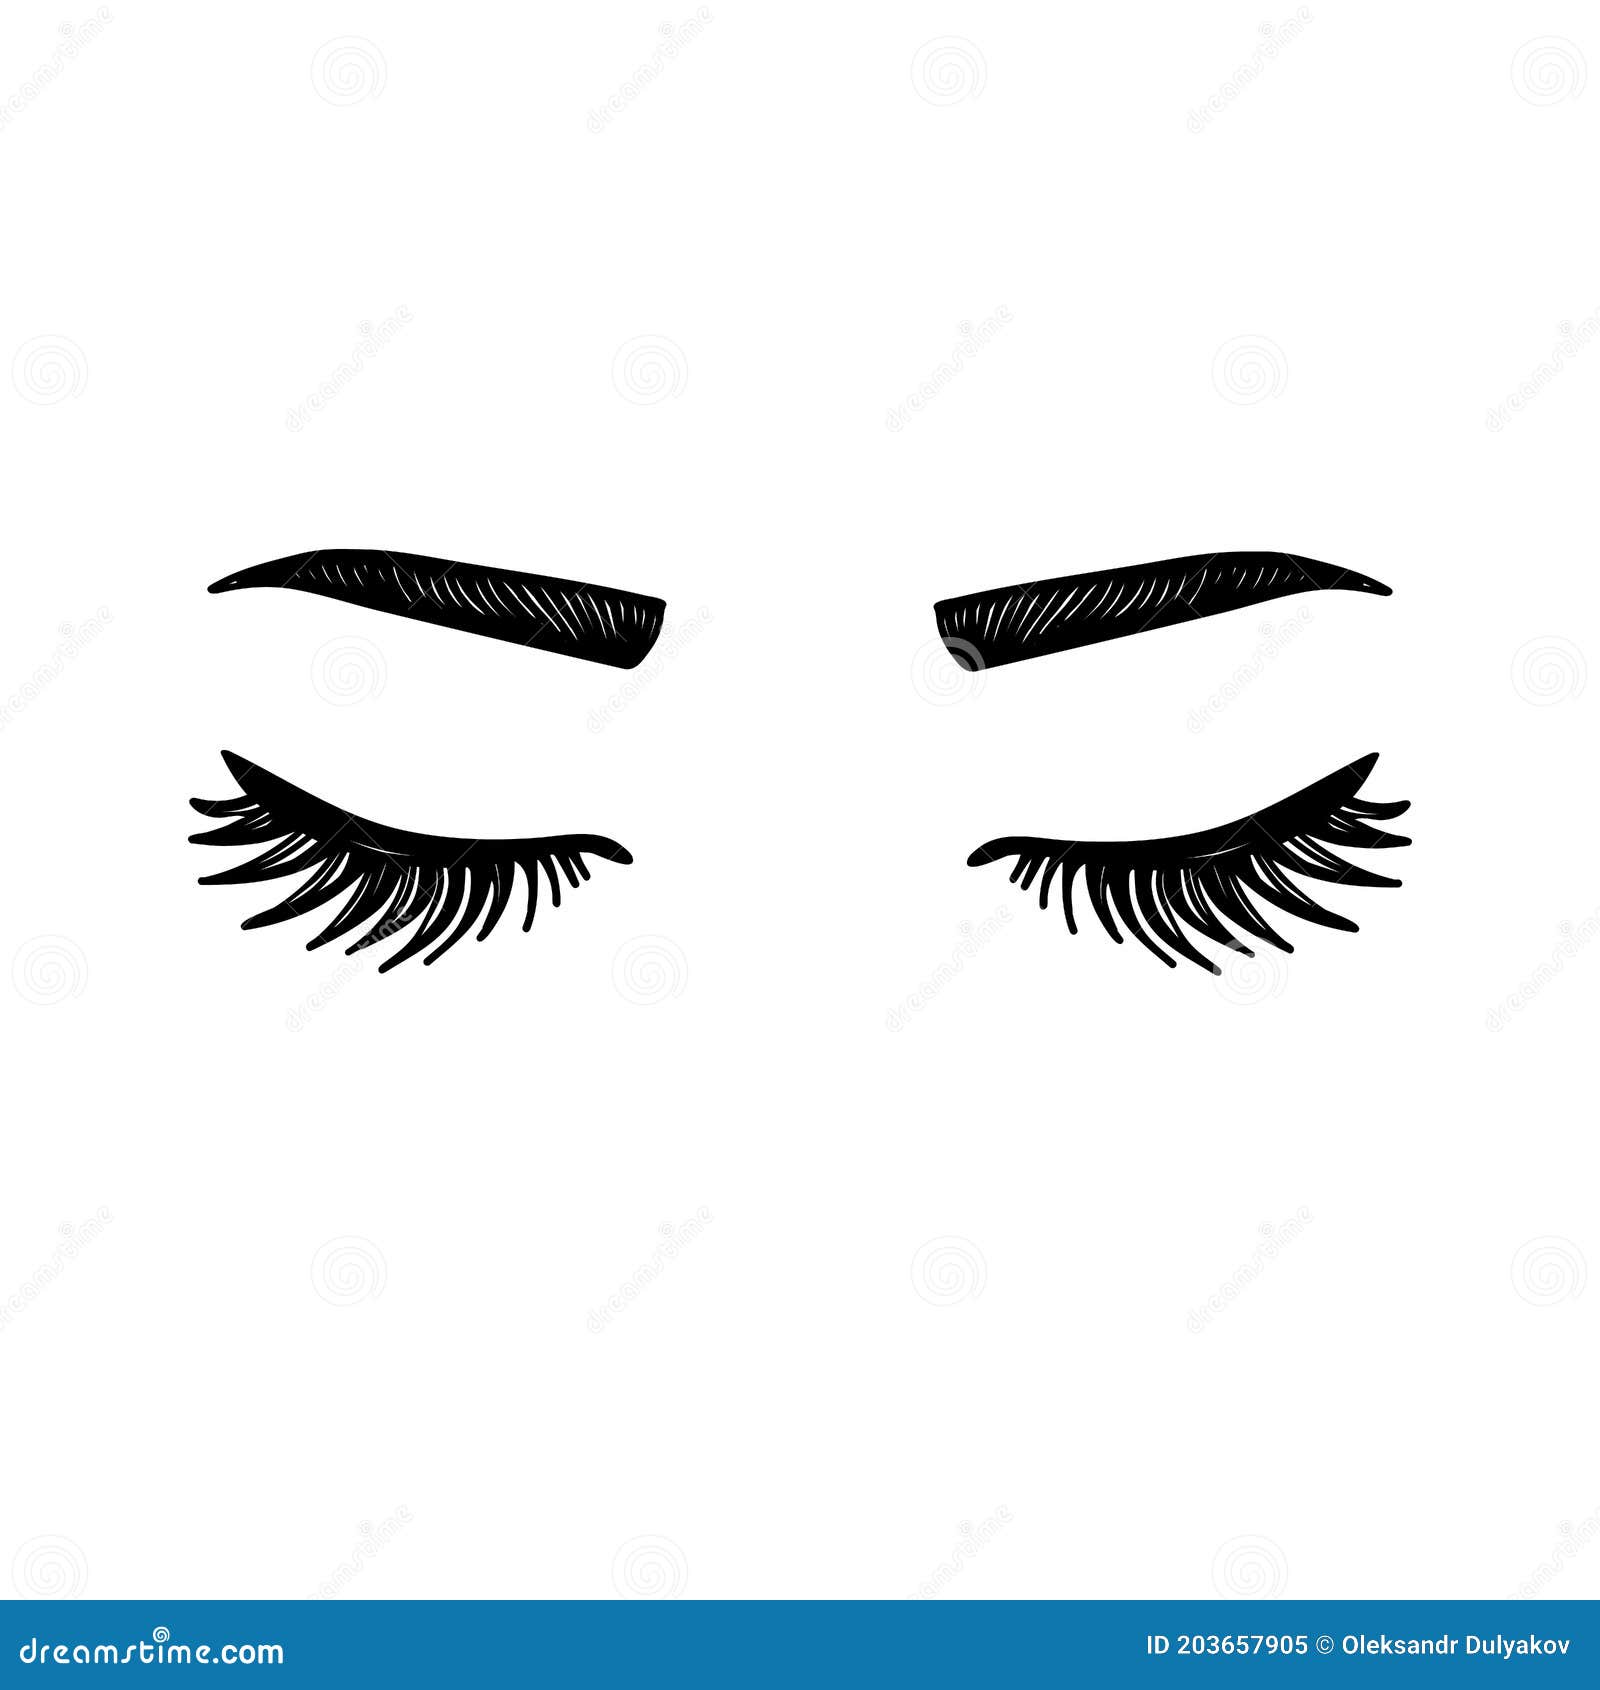 10800 Closed Eye Illustrations RoyaltyFree Vector Graphics  Clip Art   iStock  Closed eye close up Closed eye icon Closed eye makeup